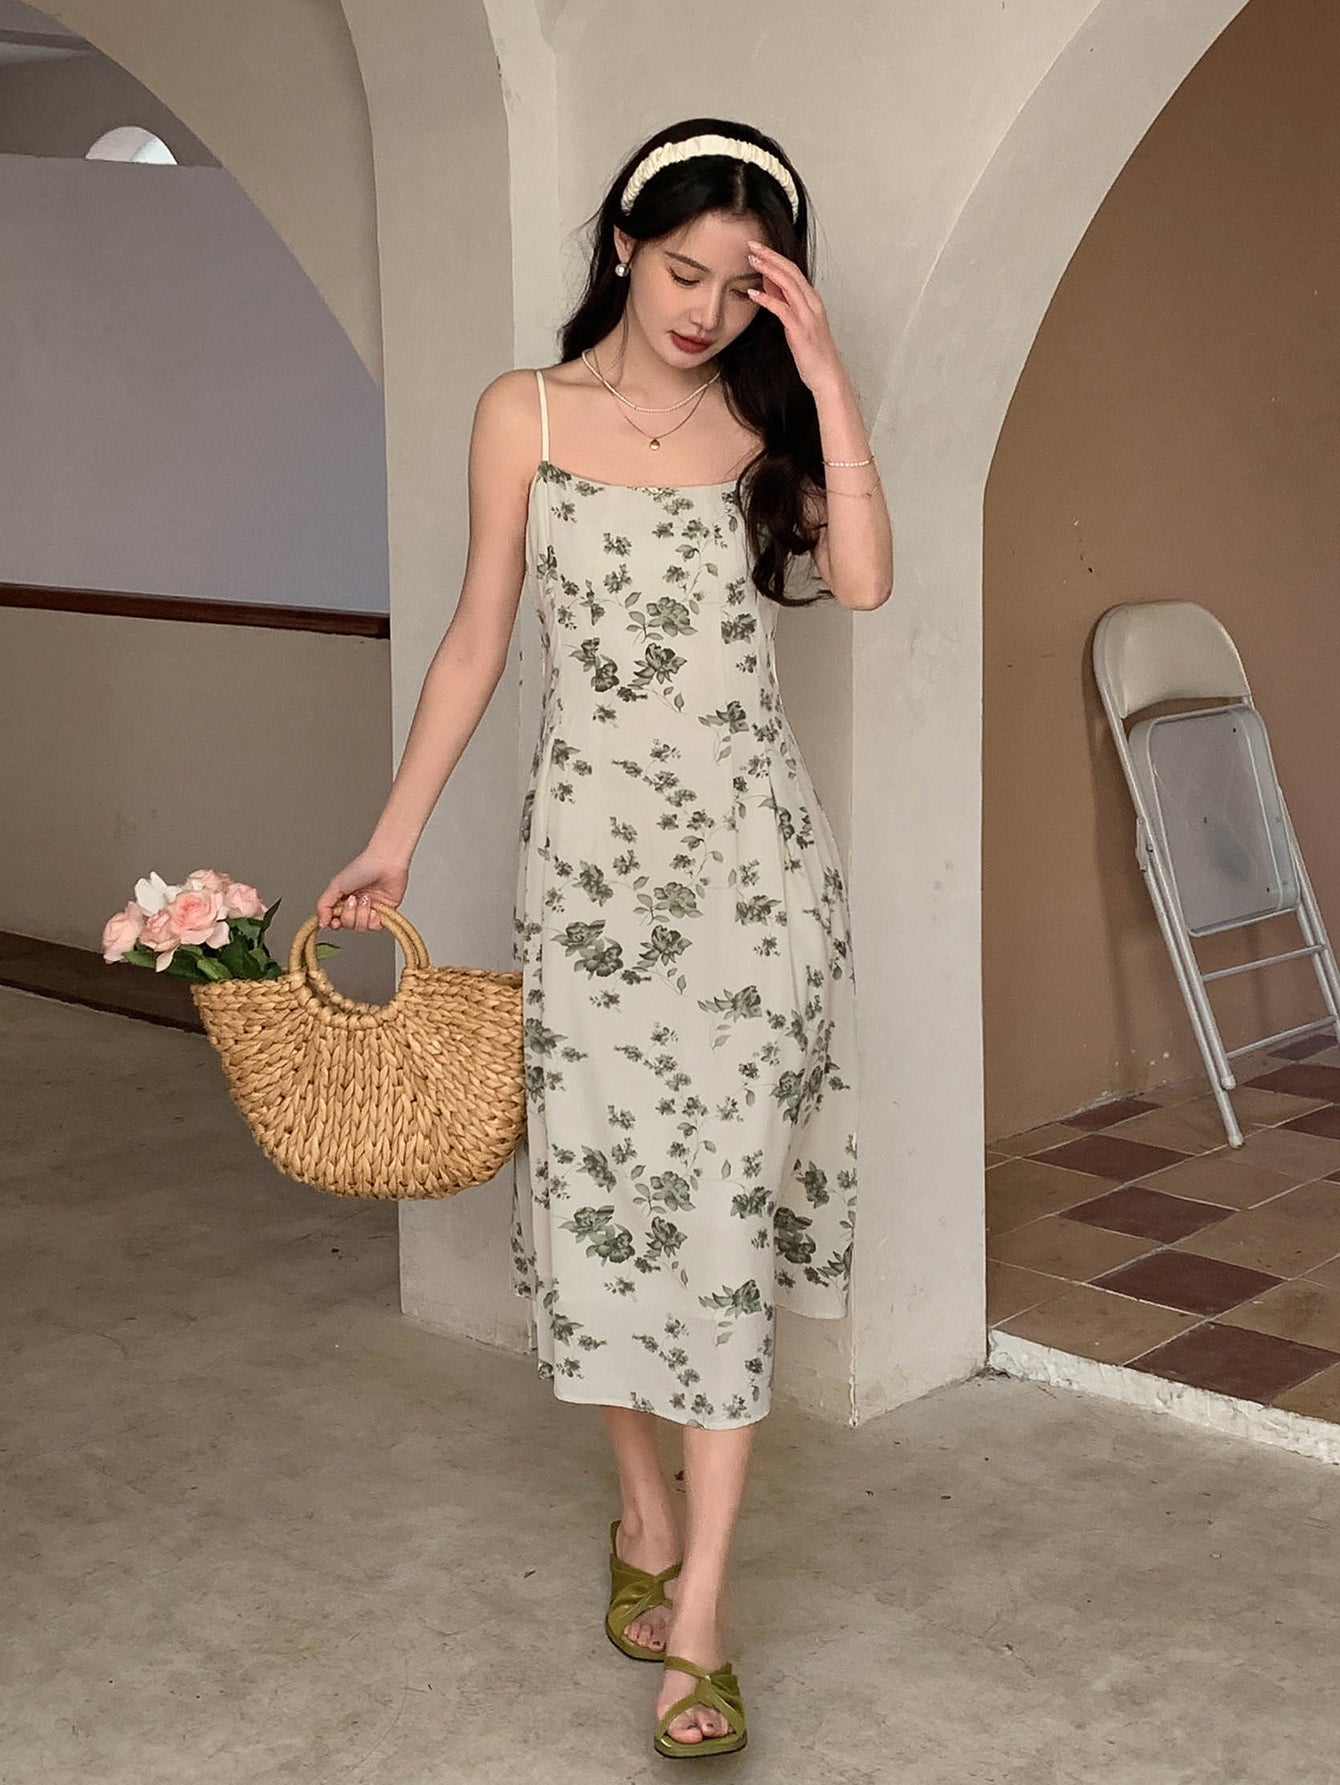 Floral Print Cami Dress